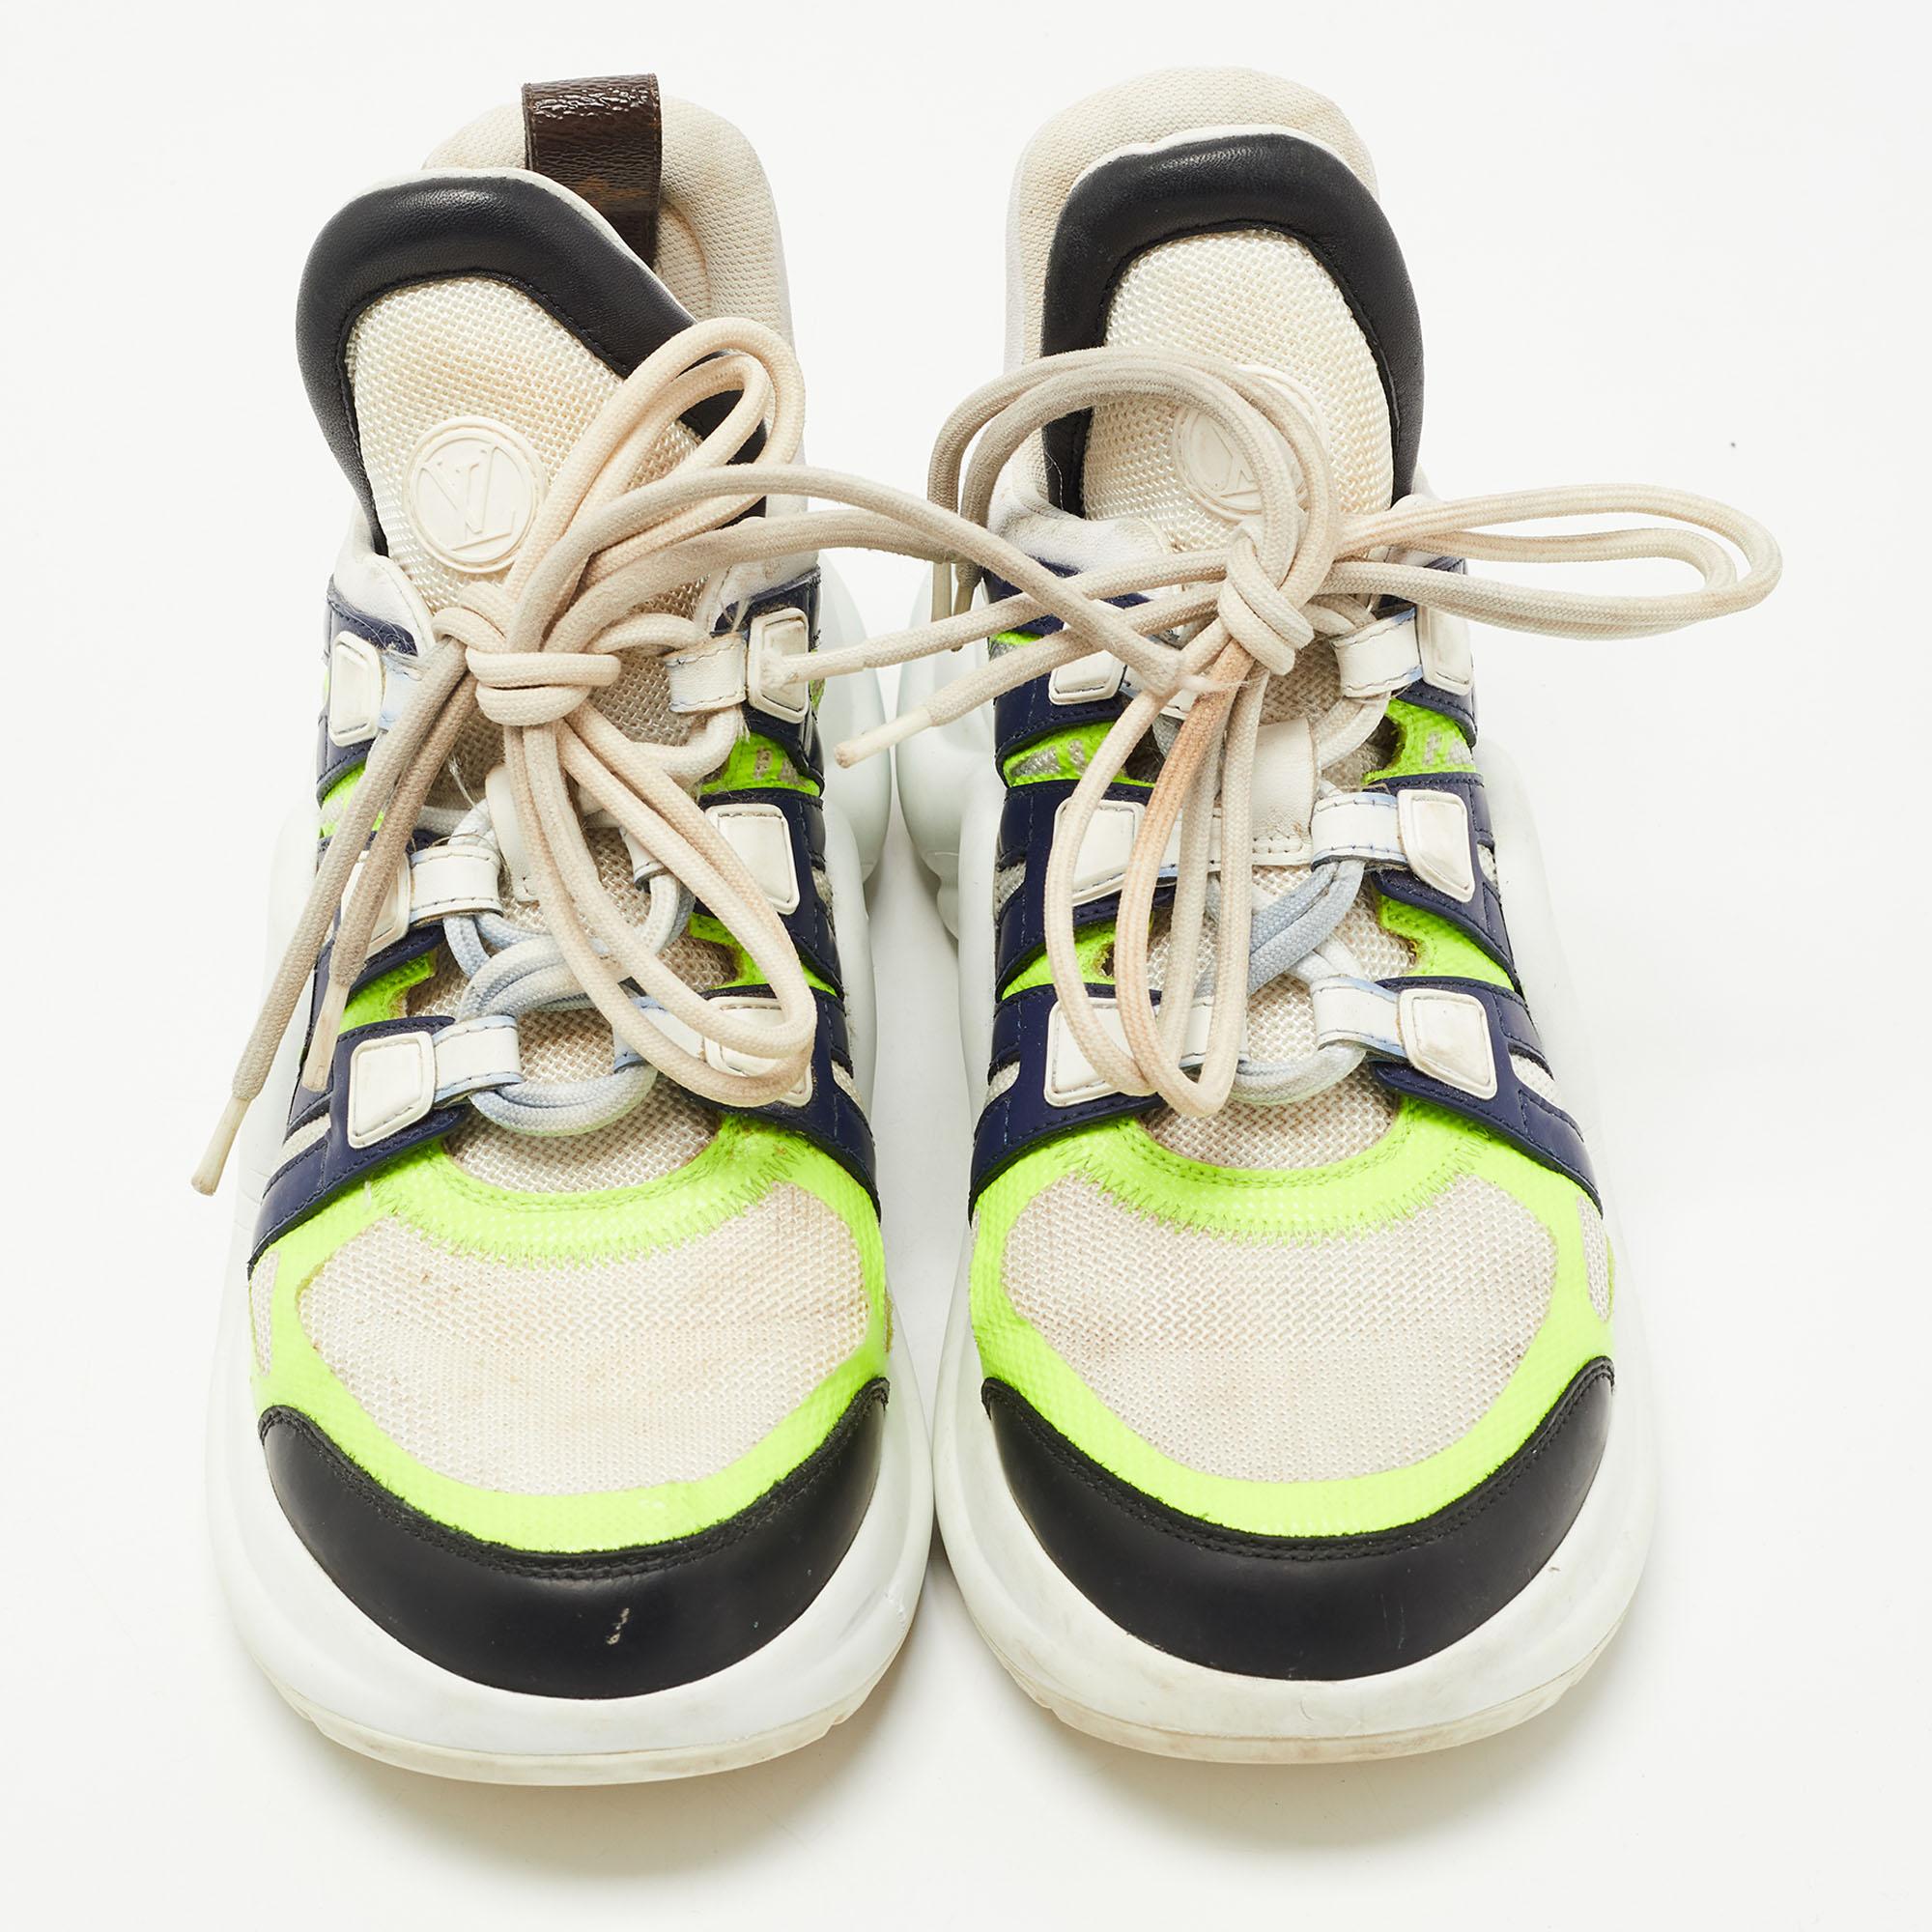 Louis Vuitton Multicolor Leather Archlight Sneakers Size 37.5 5